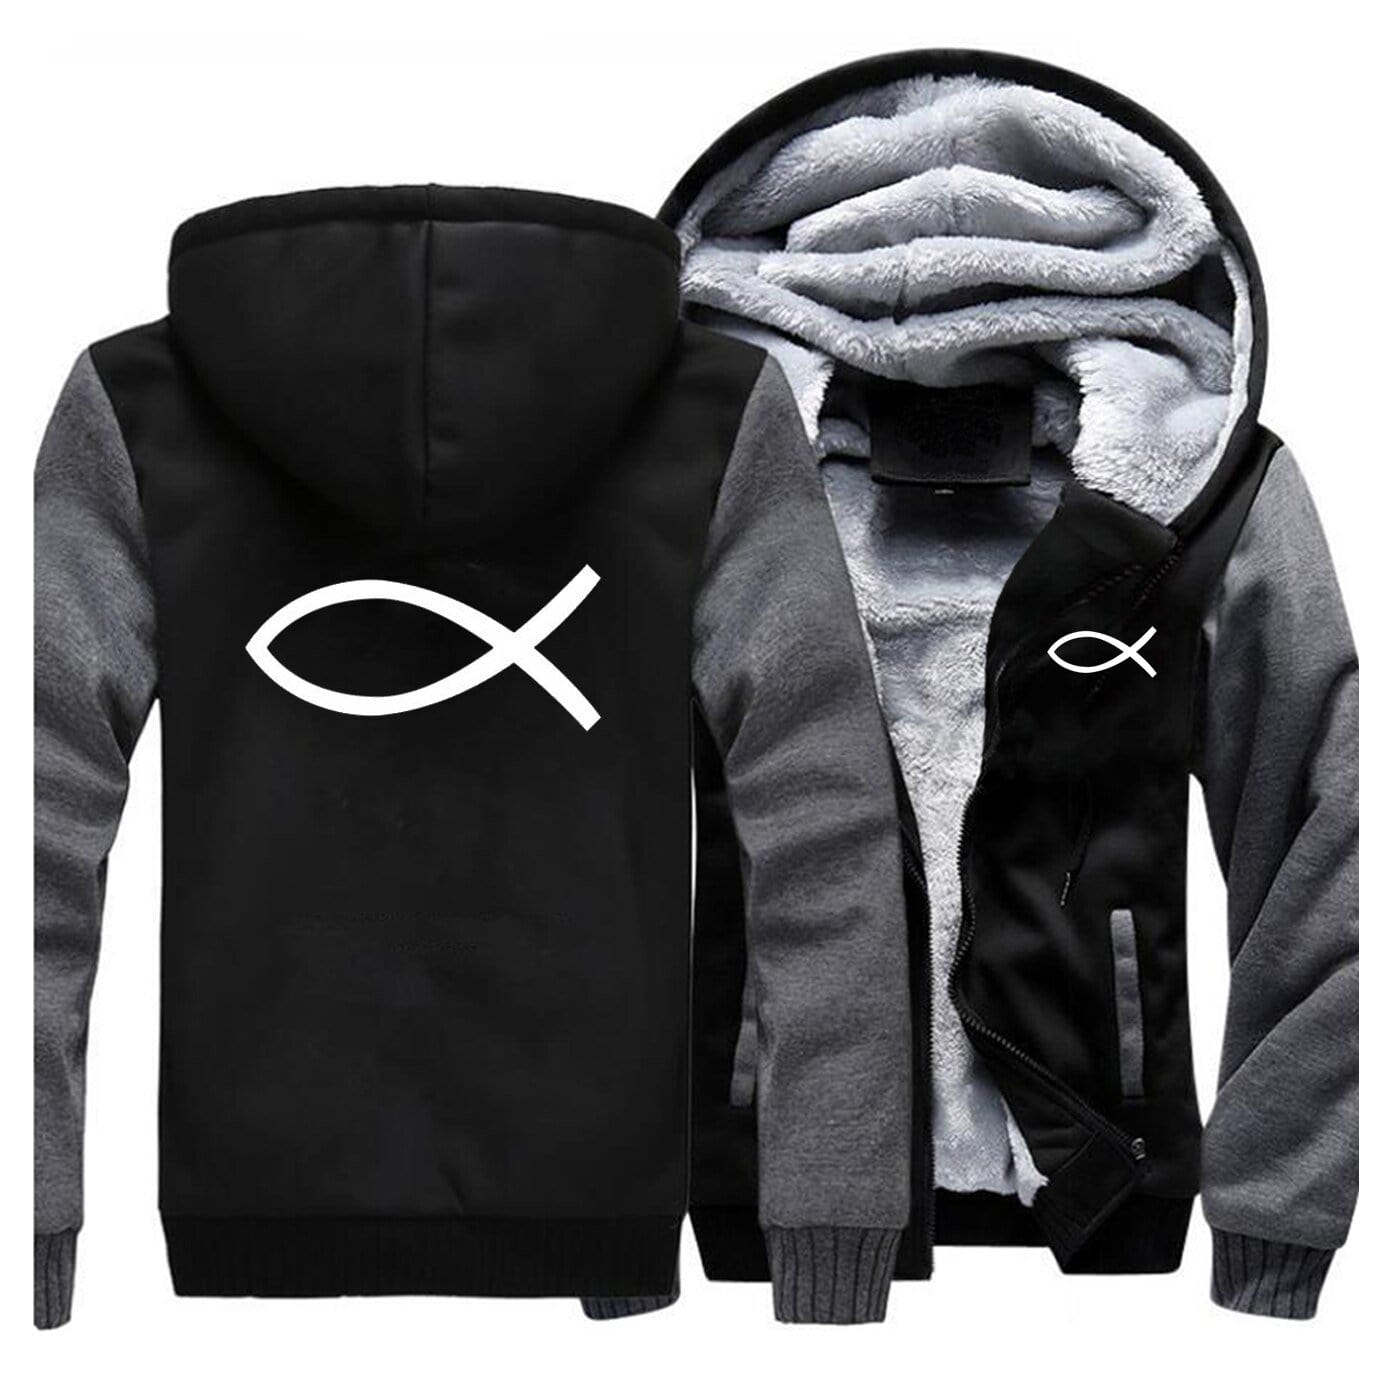 black-grey-ichthys-jacket